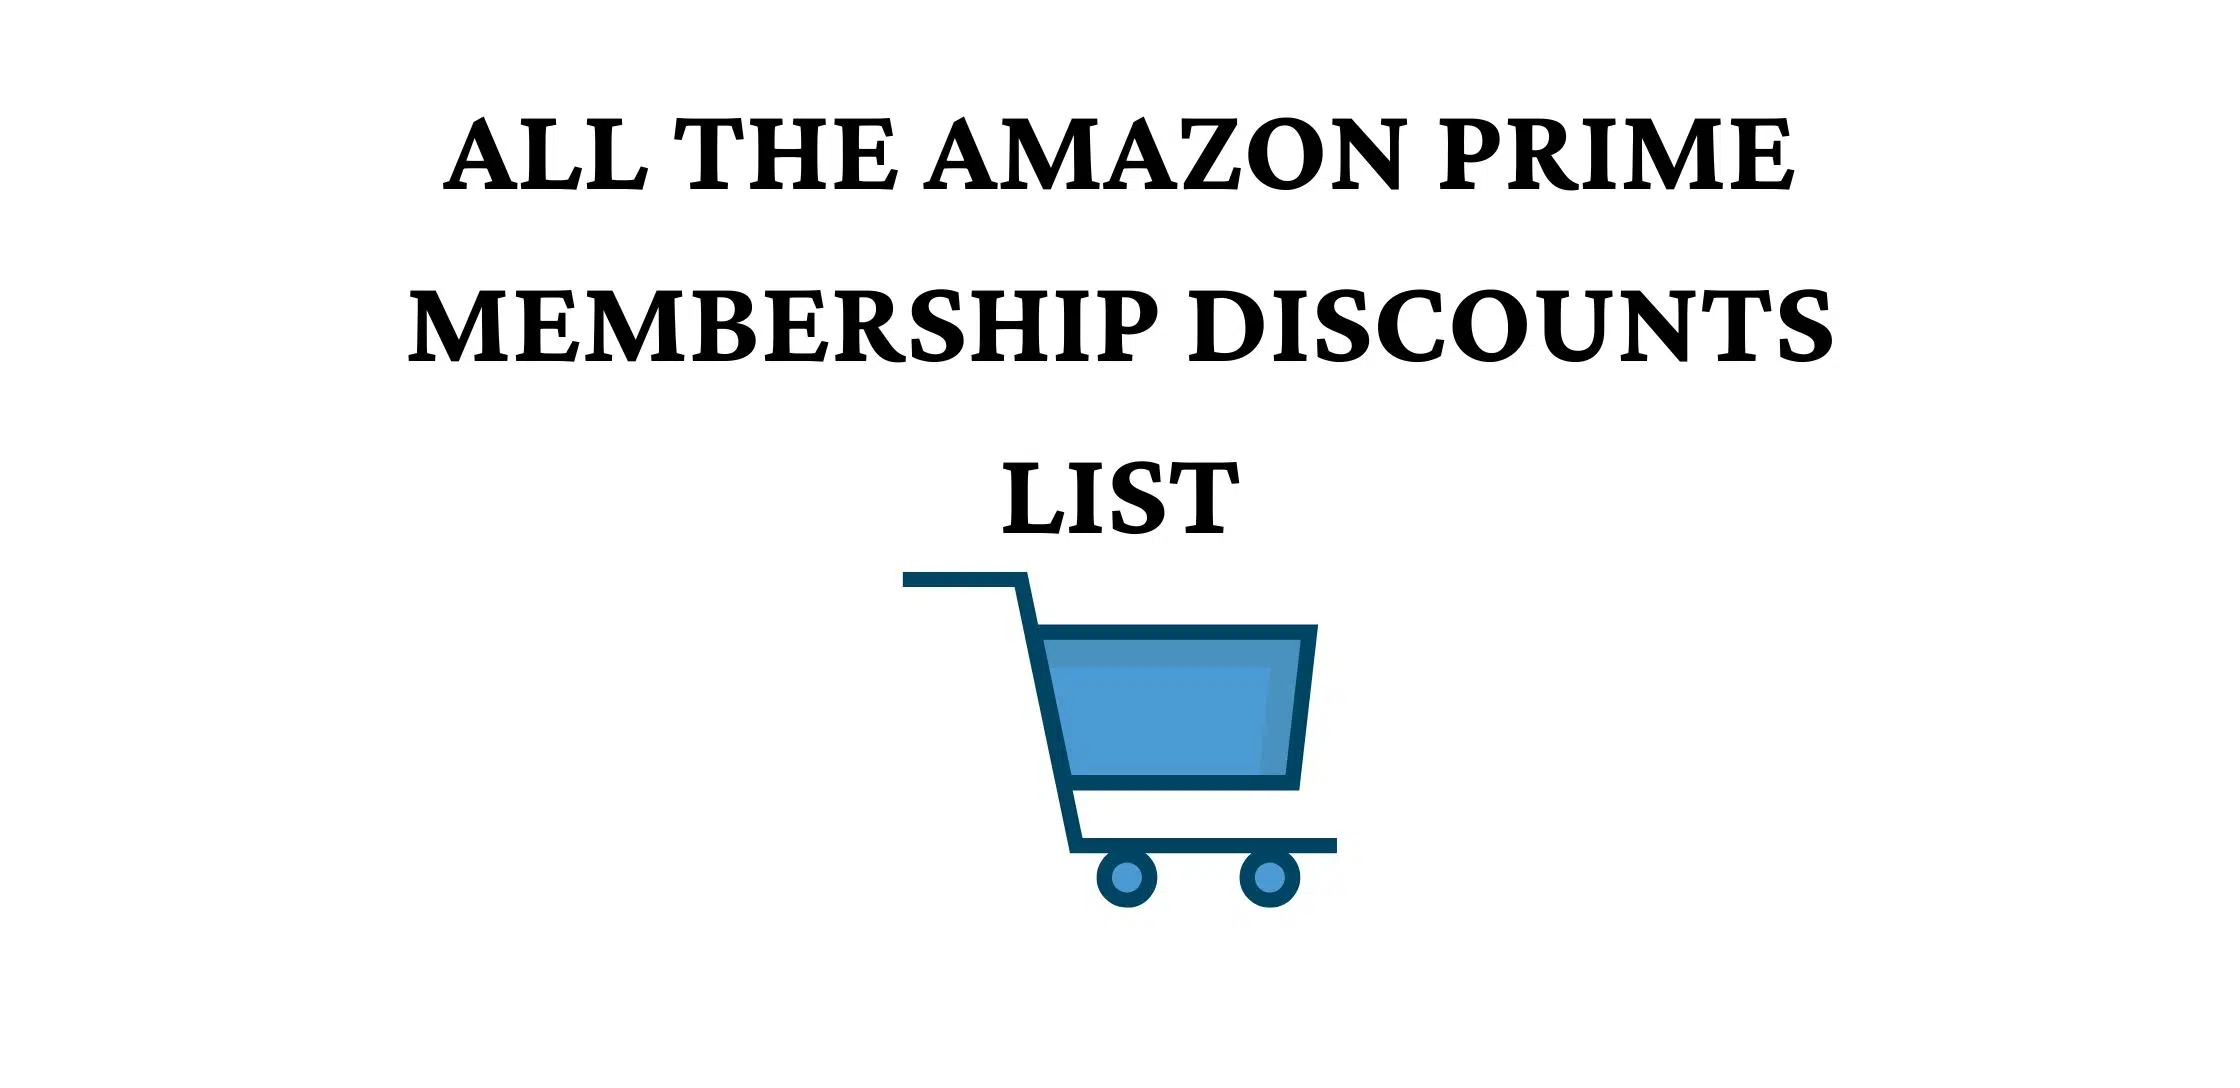 All The Amazon Prime Membership Discounts List